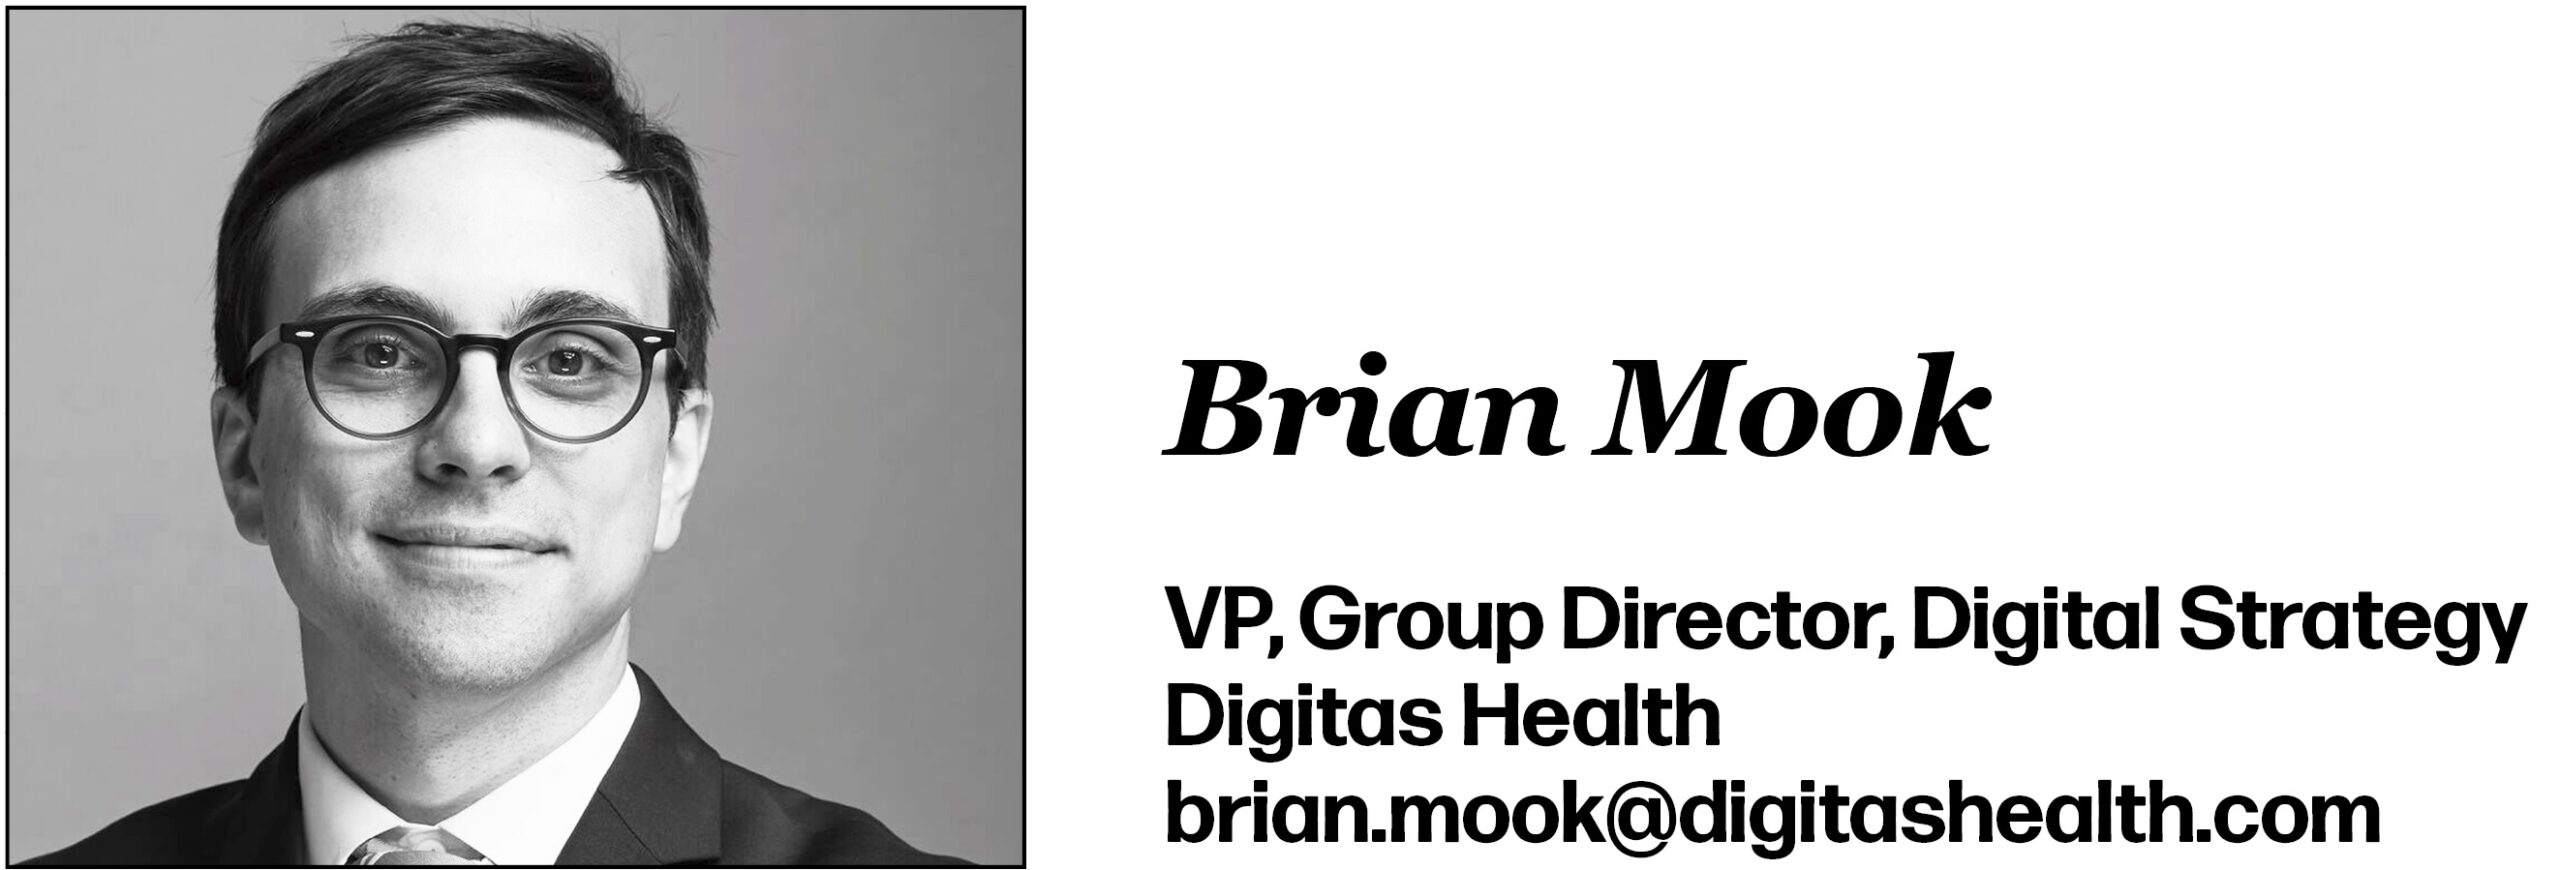 Brian Mook VP, Group Director, Digital Strategy Digitas Health brian.mook@digitashealth.com 